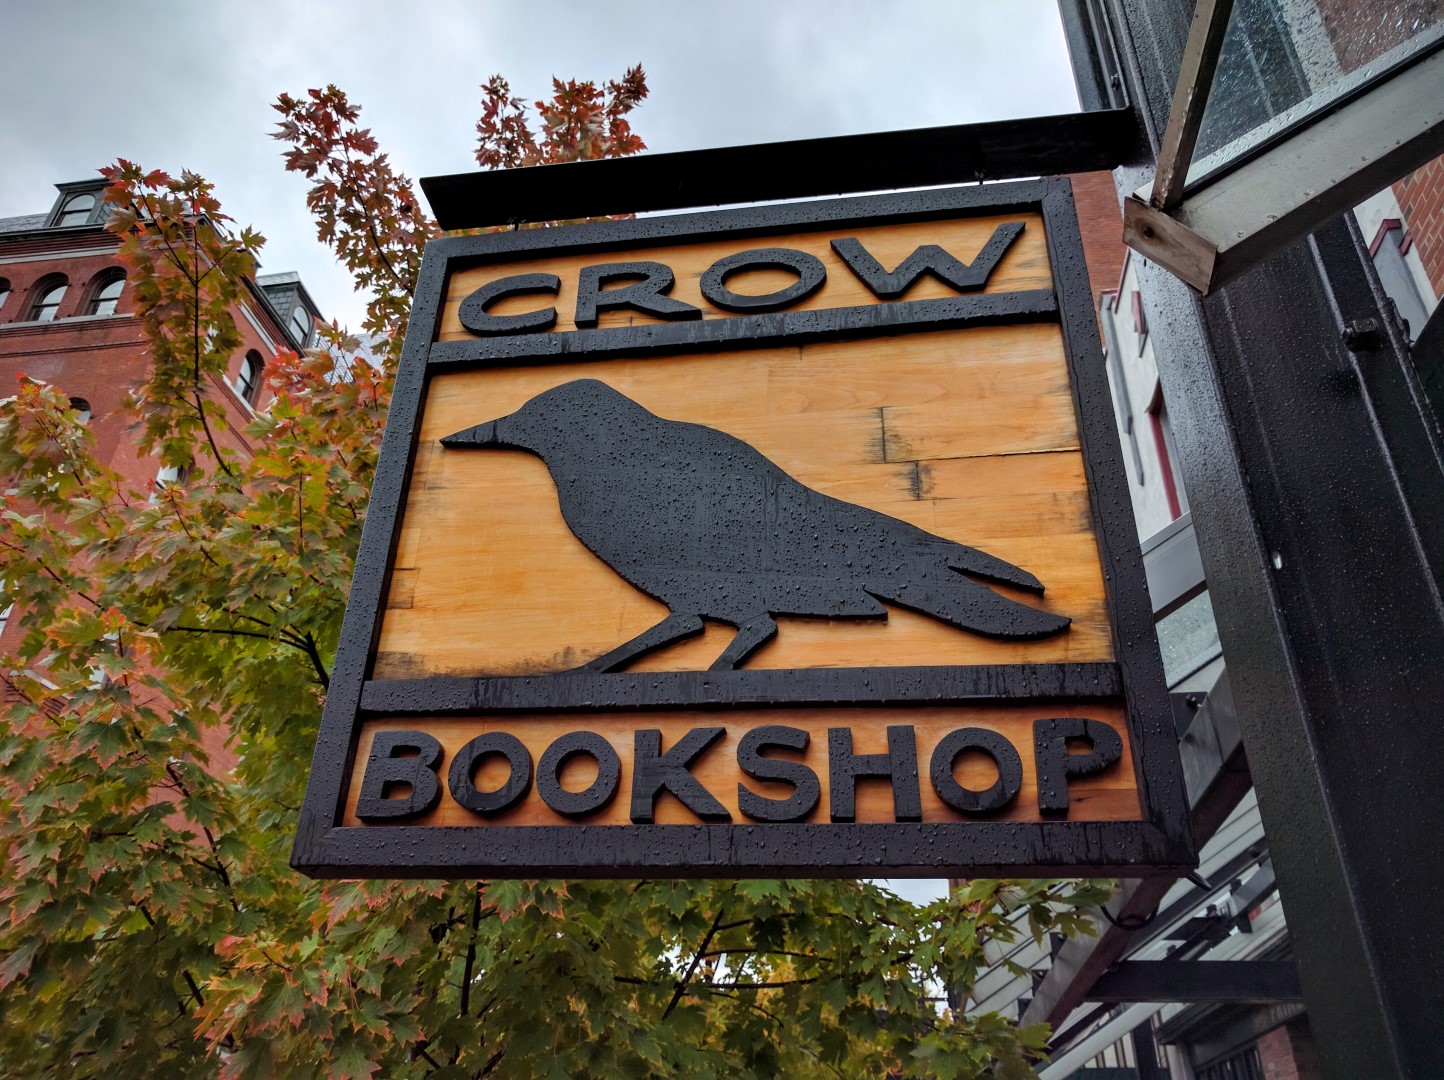 Crow bookshop